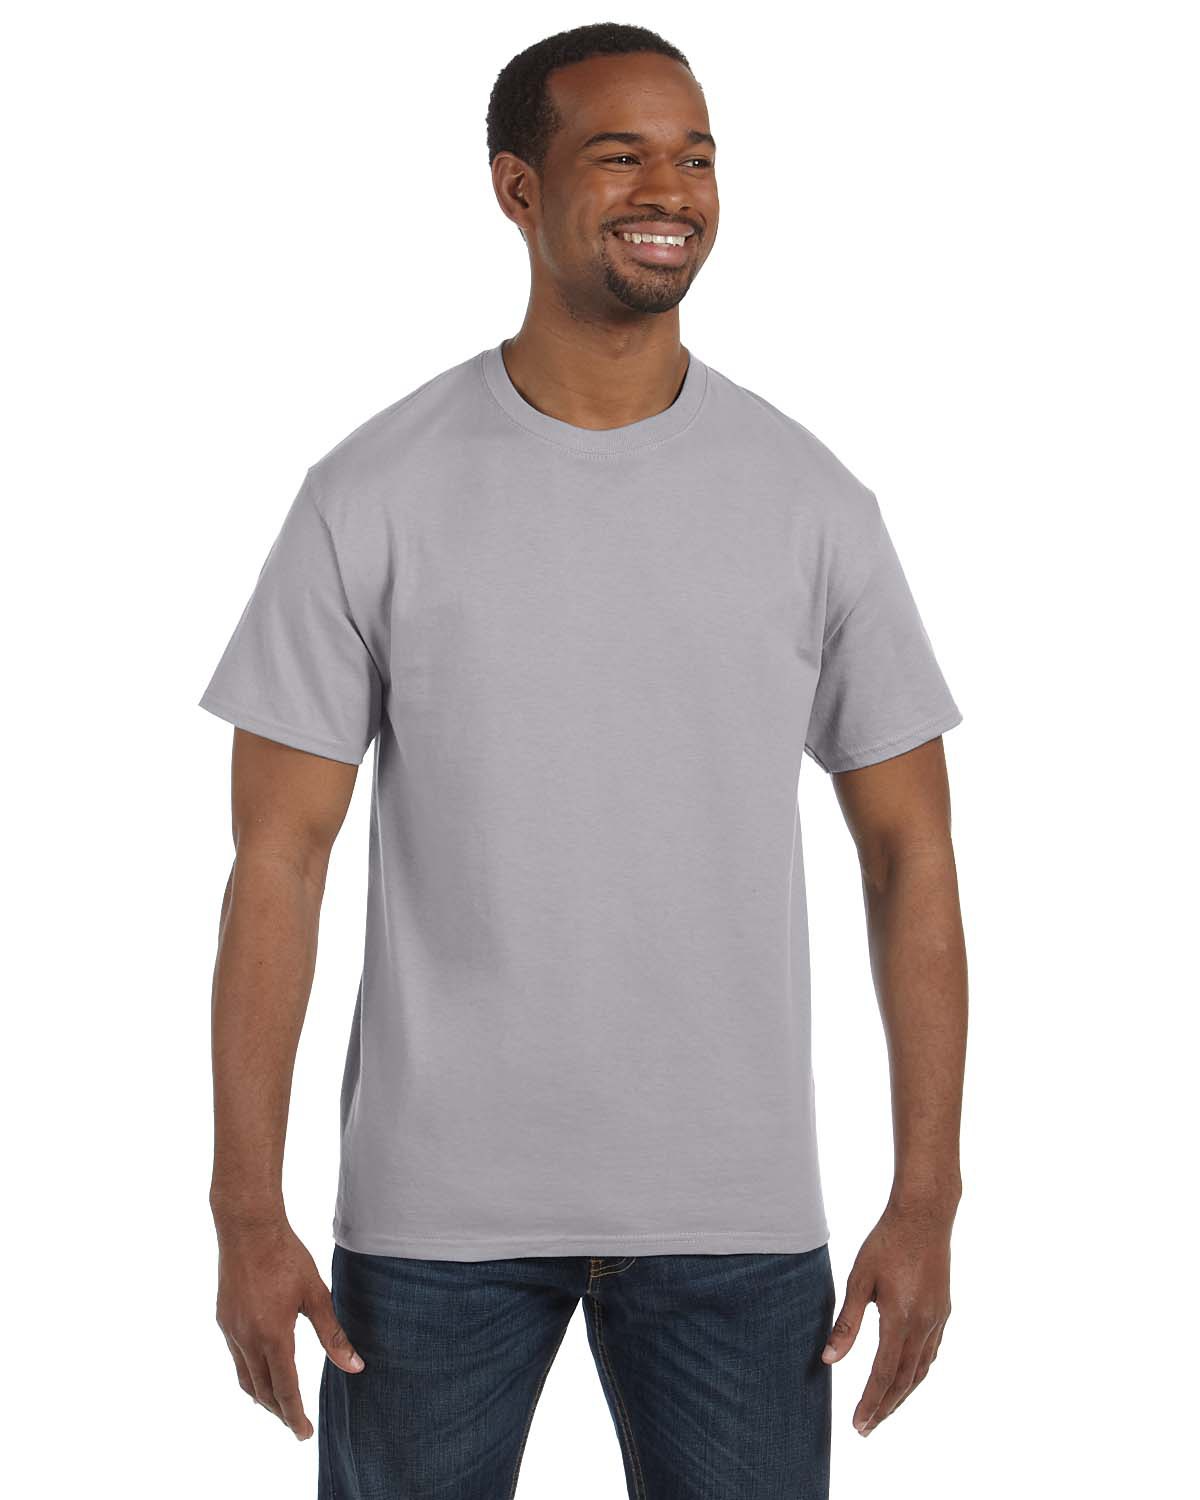 12 NEW Wholesale Hanes Tagless 5250 100% Cotton White Adult T-Shirts S M L XL 